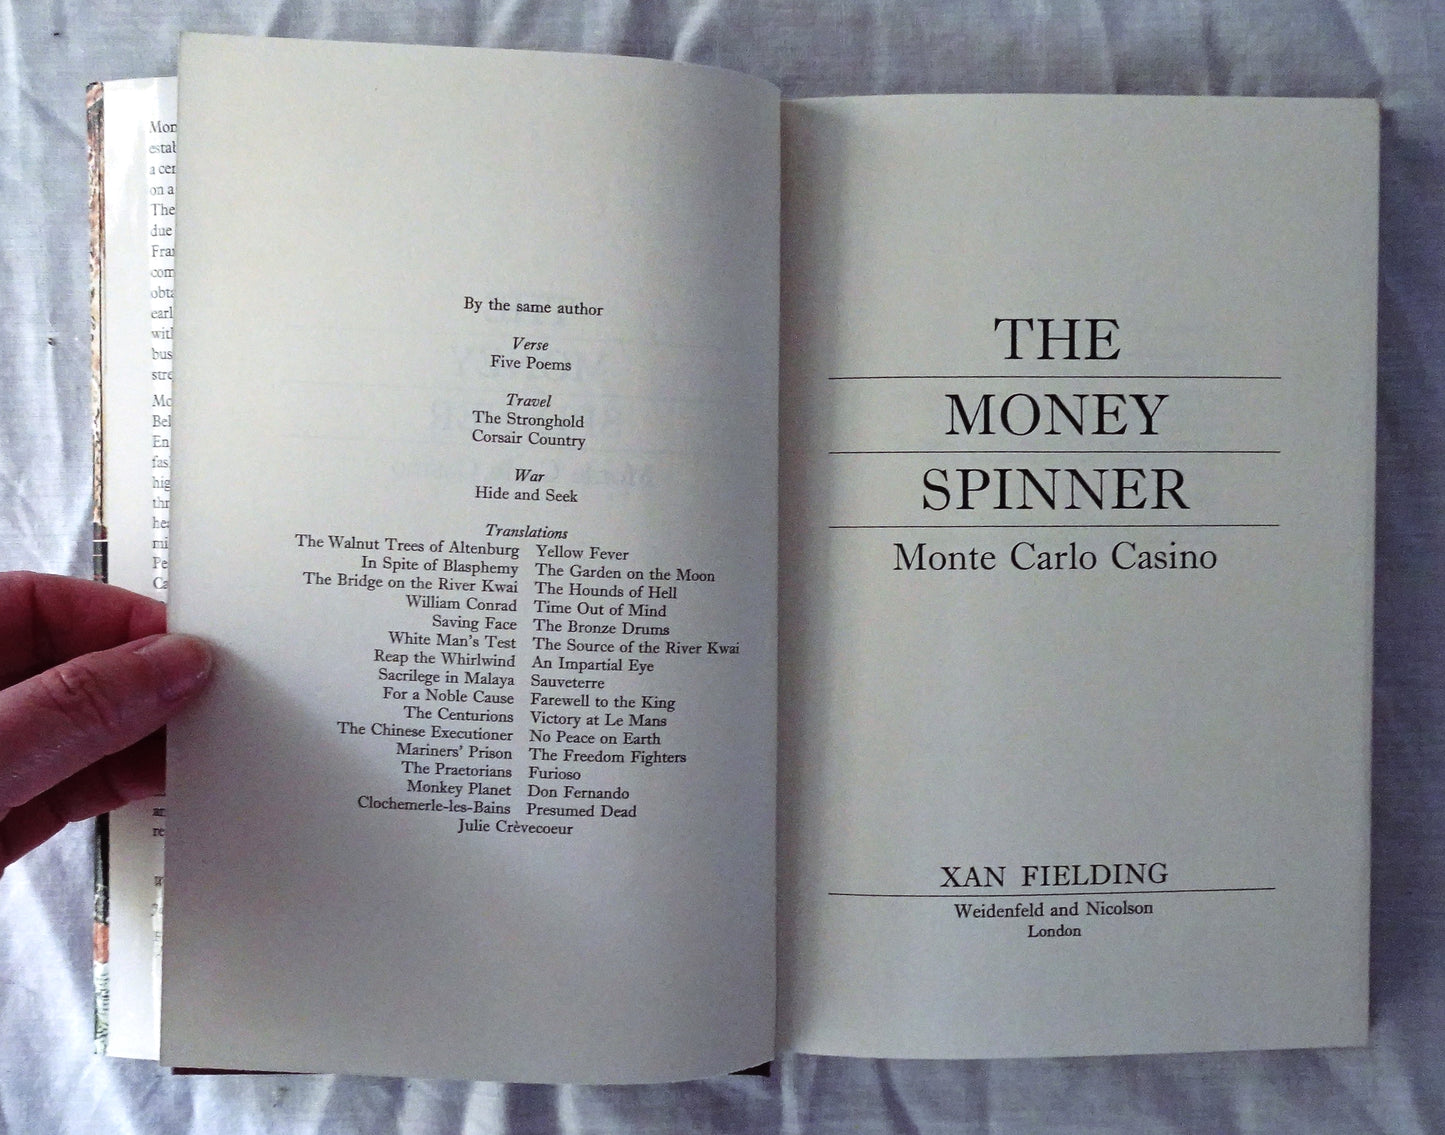 The Money Spinner by Xan Fielding